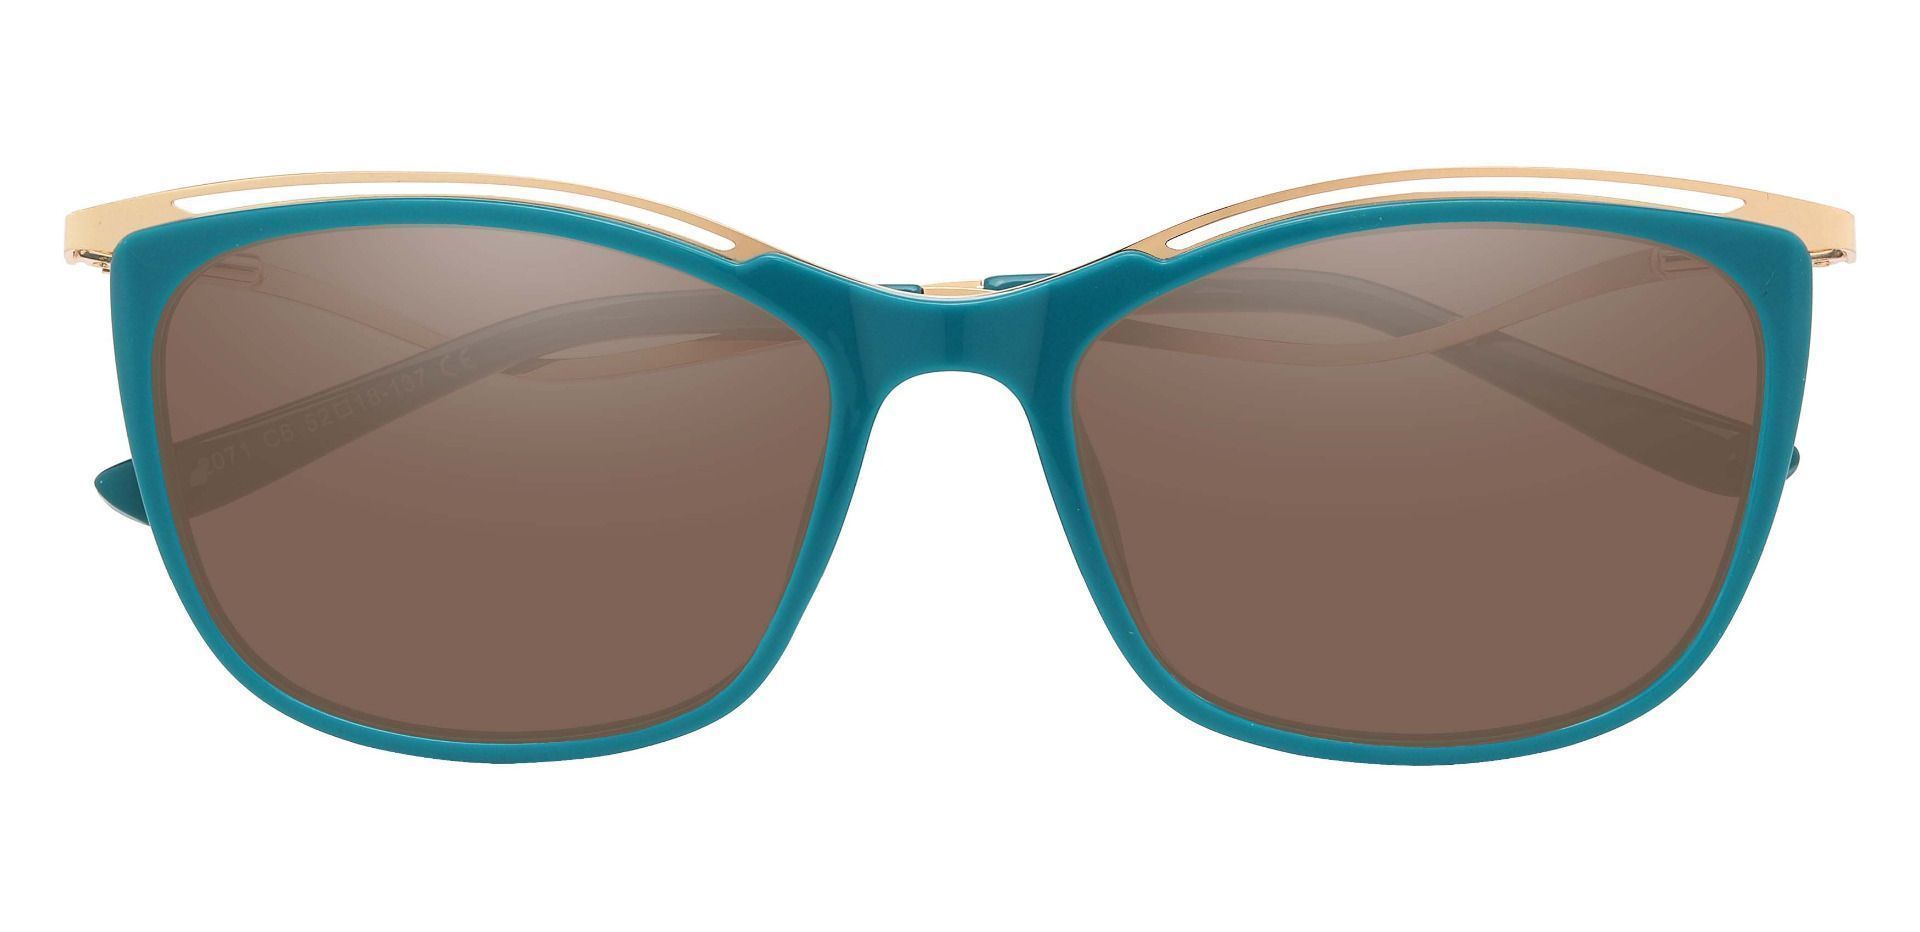 Enola Cat Eye Progressive Sunglasses - Green Frame With Brown Lenses